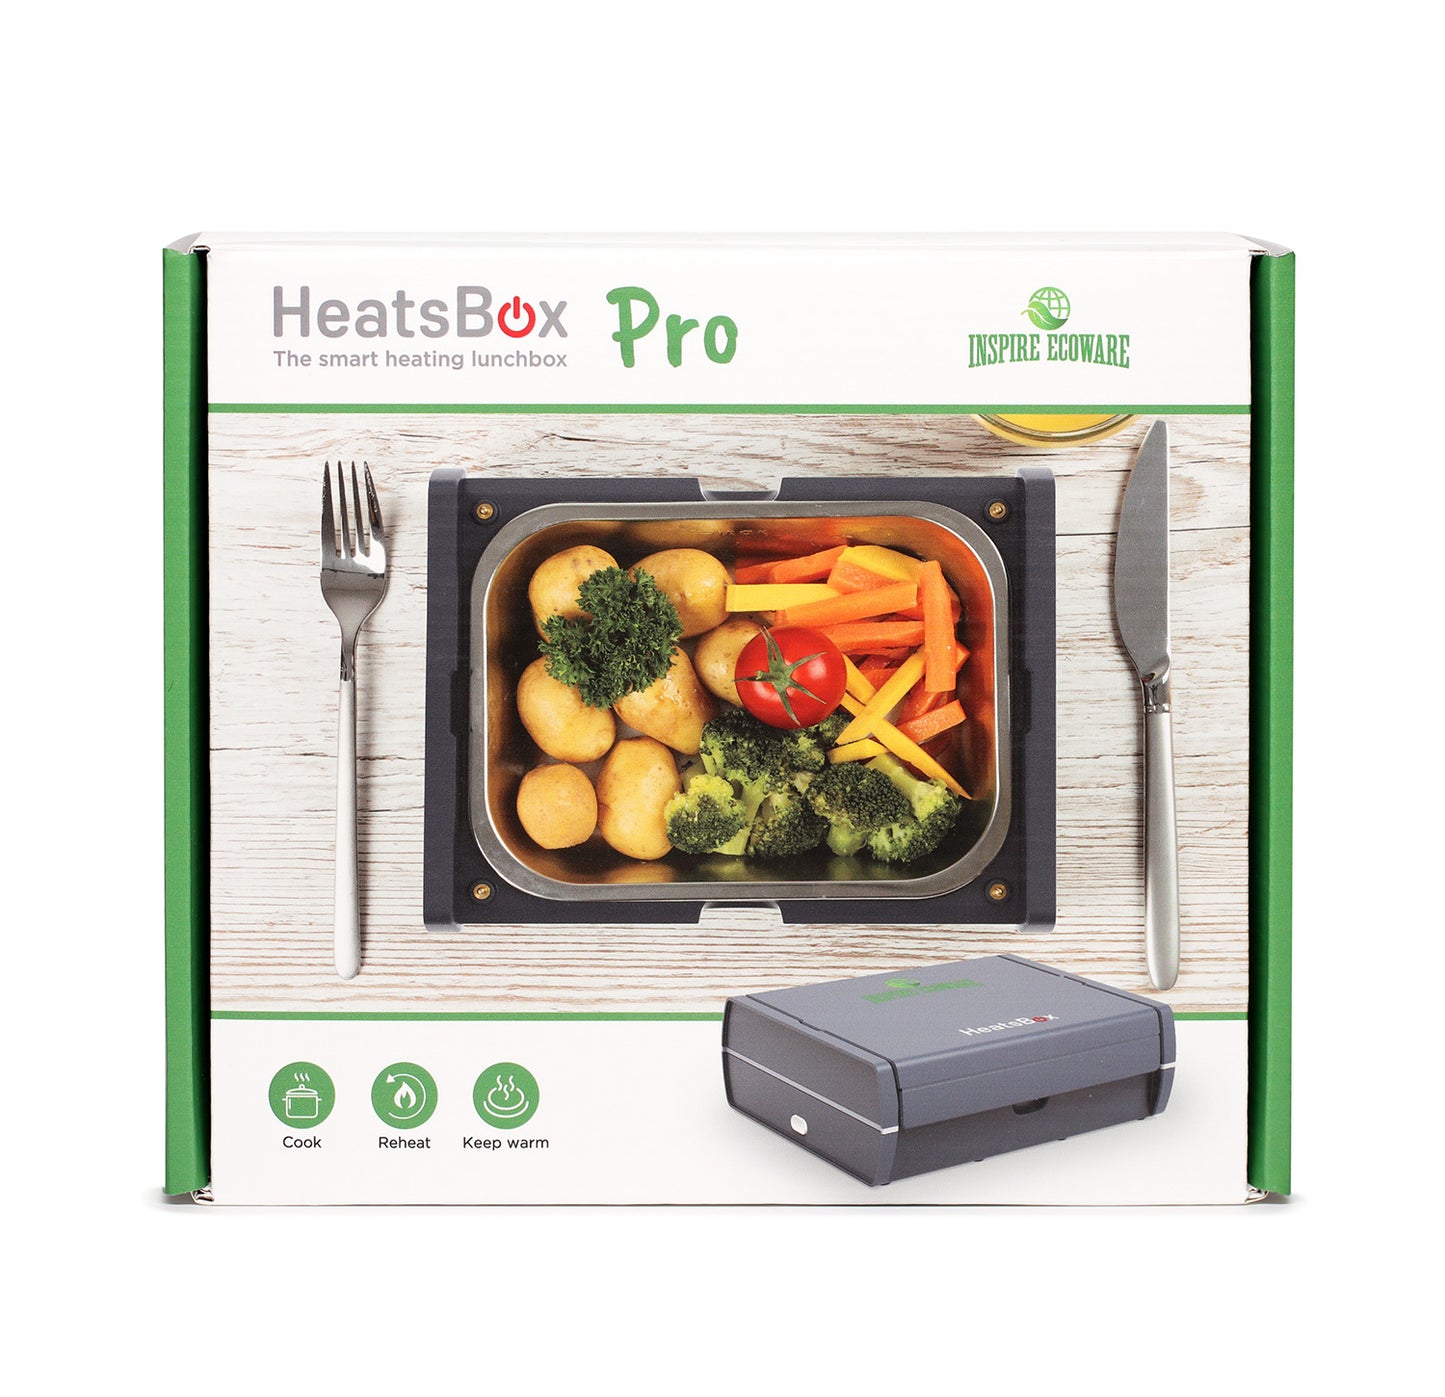 HeatsBox Portable Mini-Oven - Inspireecoware